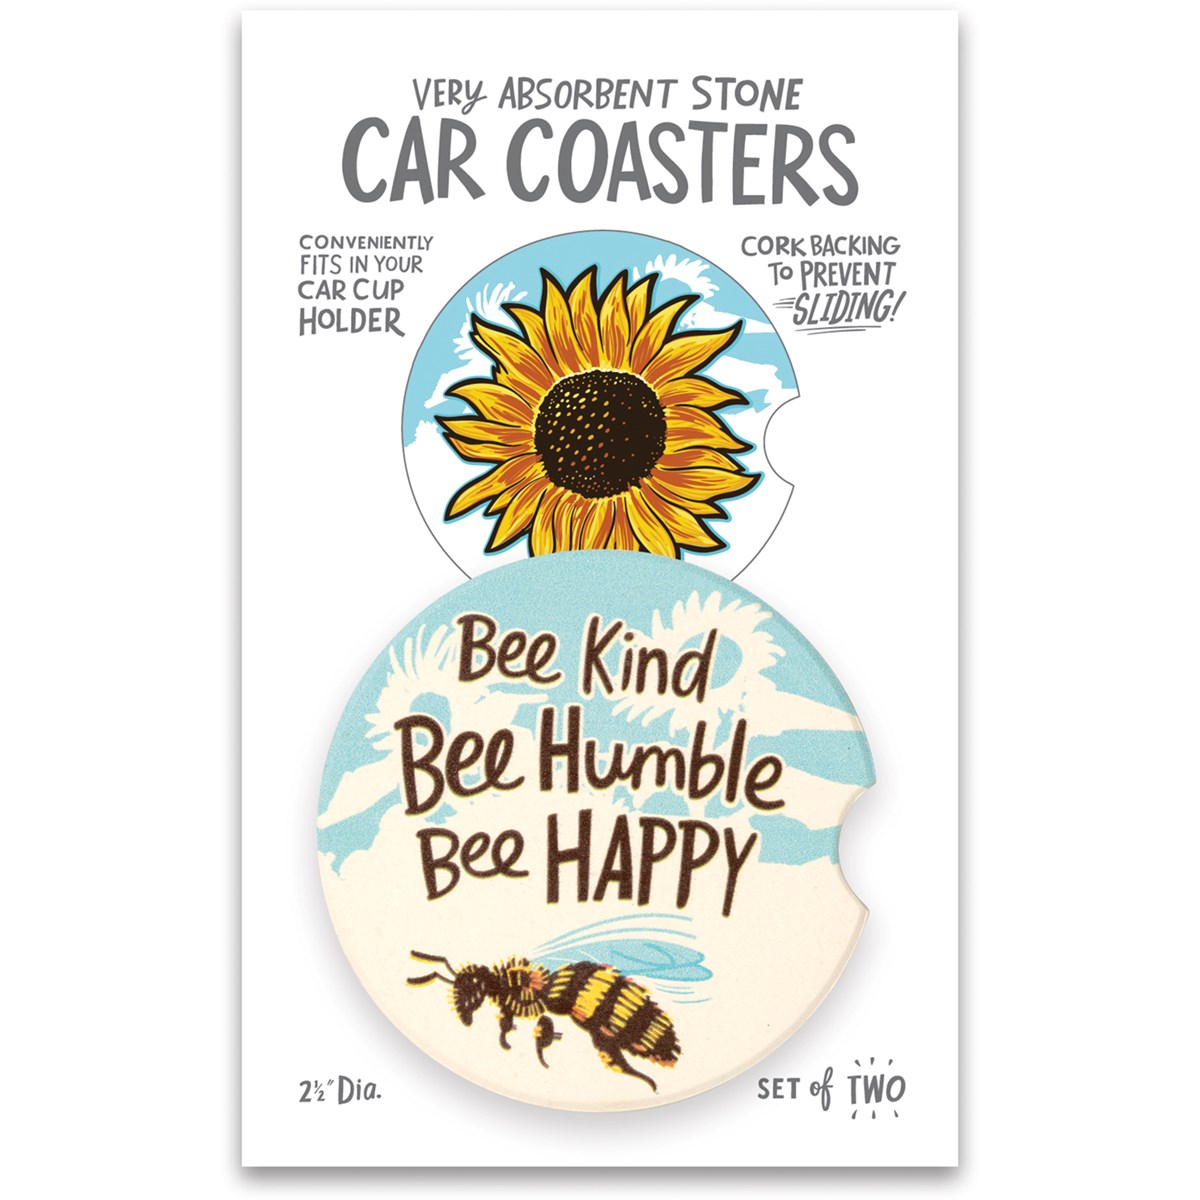 Bee Kind Bee Humble Bee Happy Car Coasters - Stone, Cork